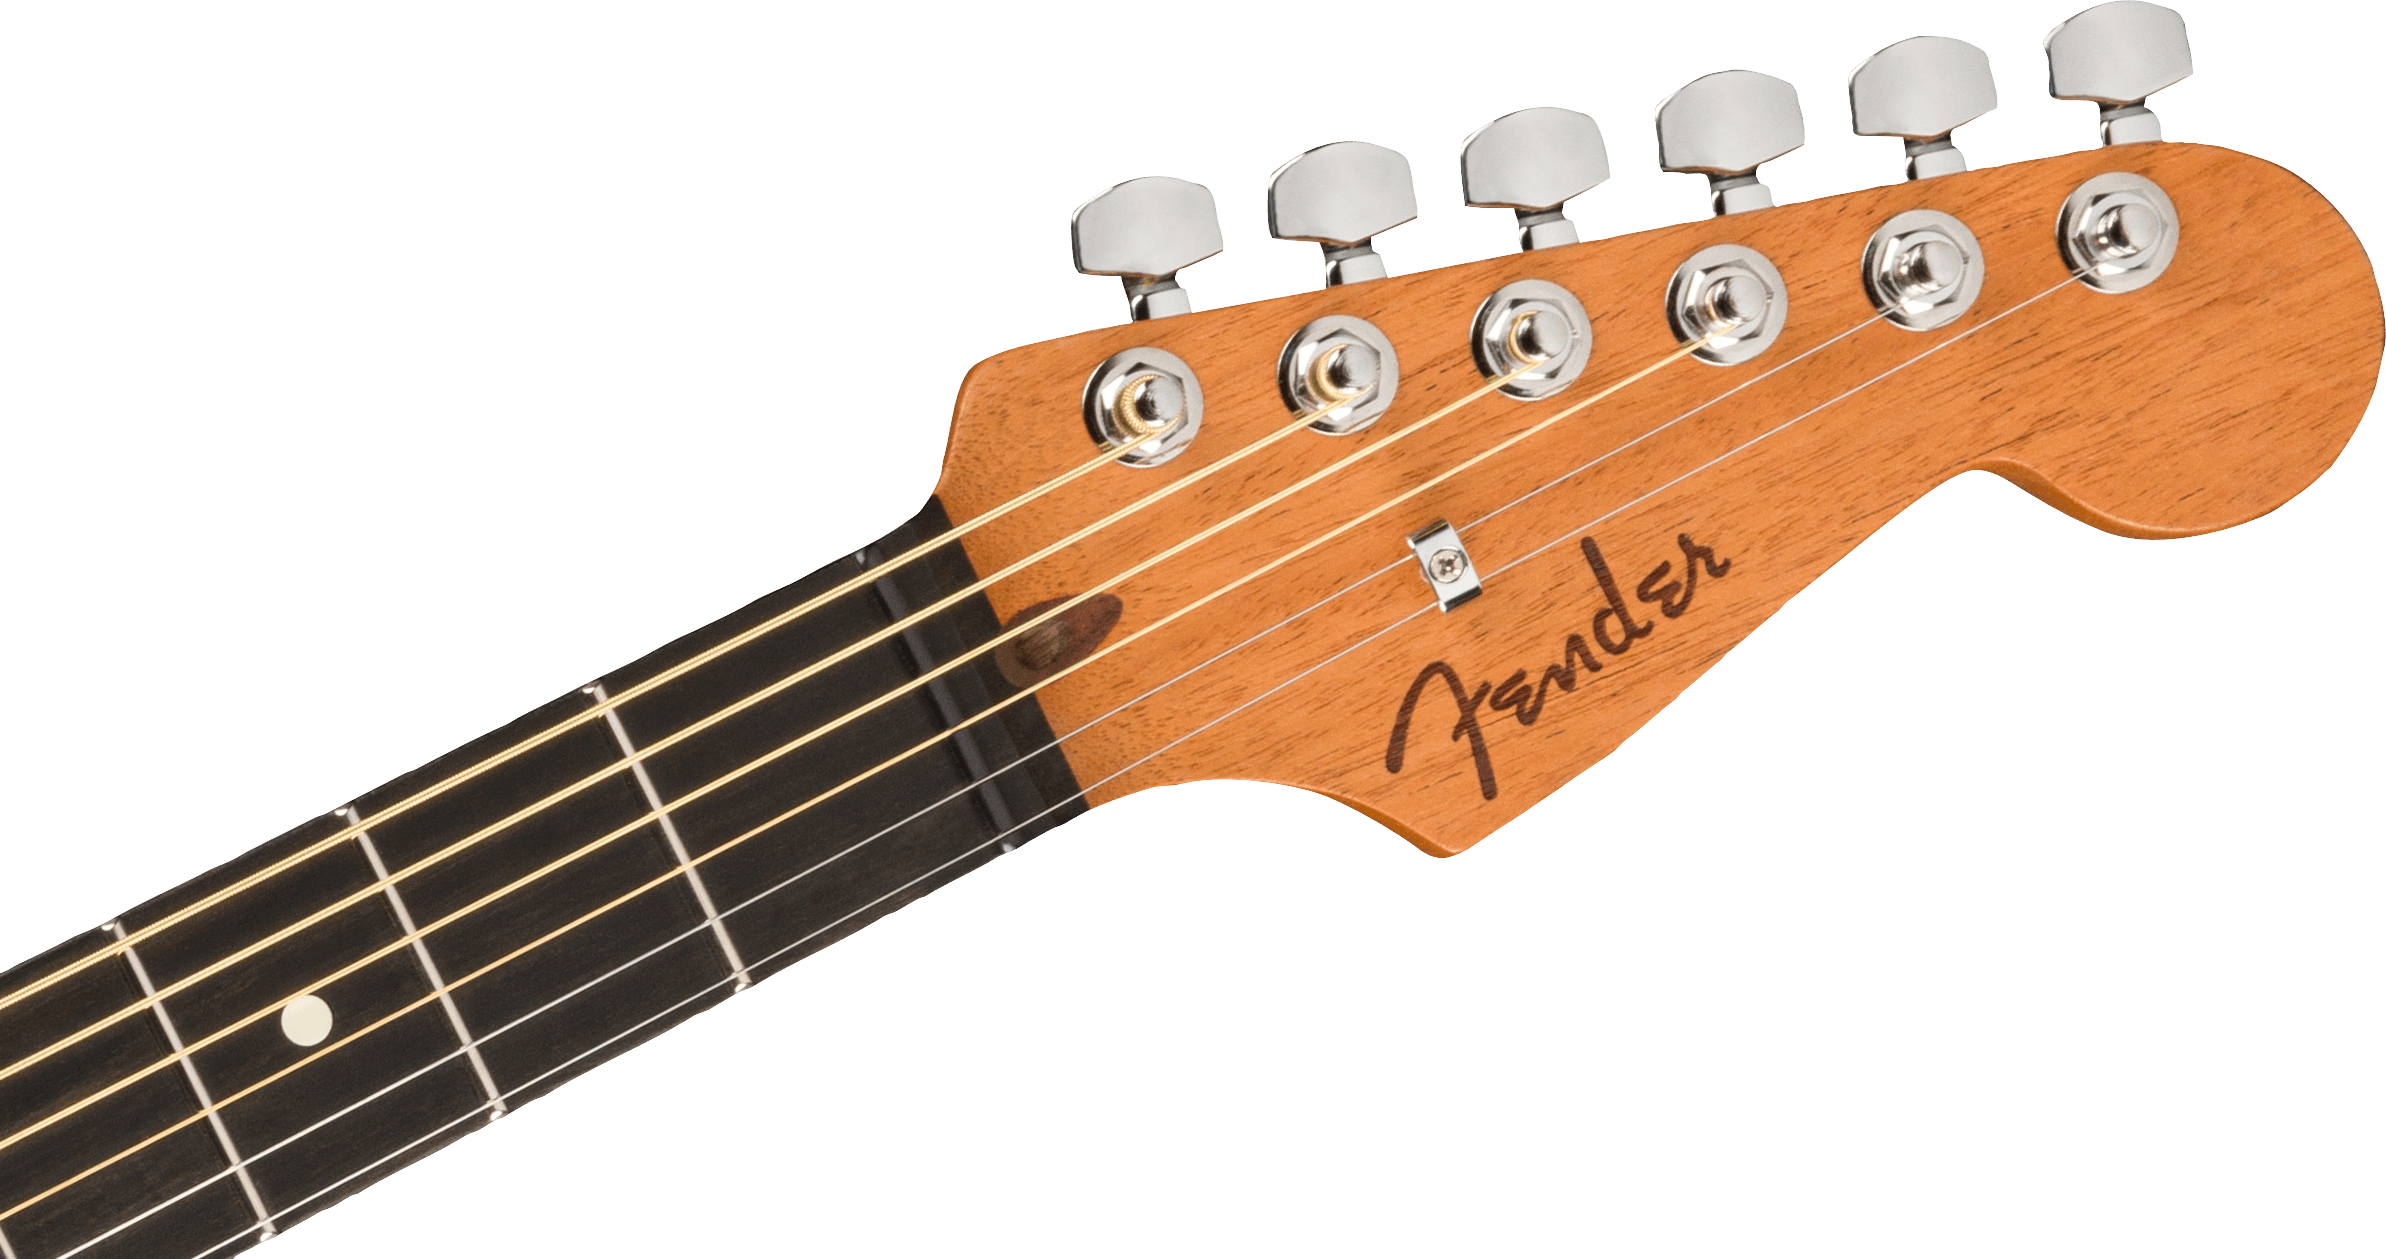 Fender American Acoustasonic® Strat®, Ebony Fingerboard (Dakota Red) - Electric Acoustic Guitar 電木結他